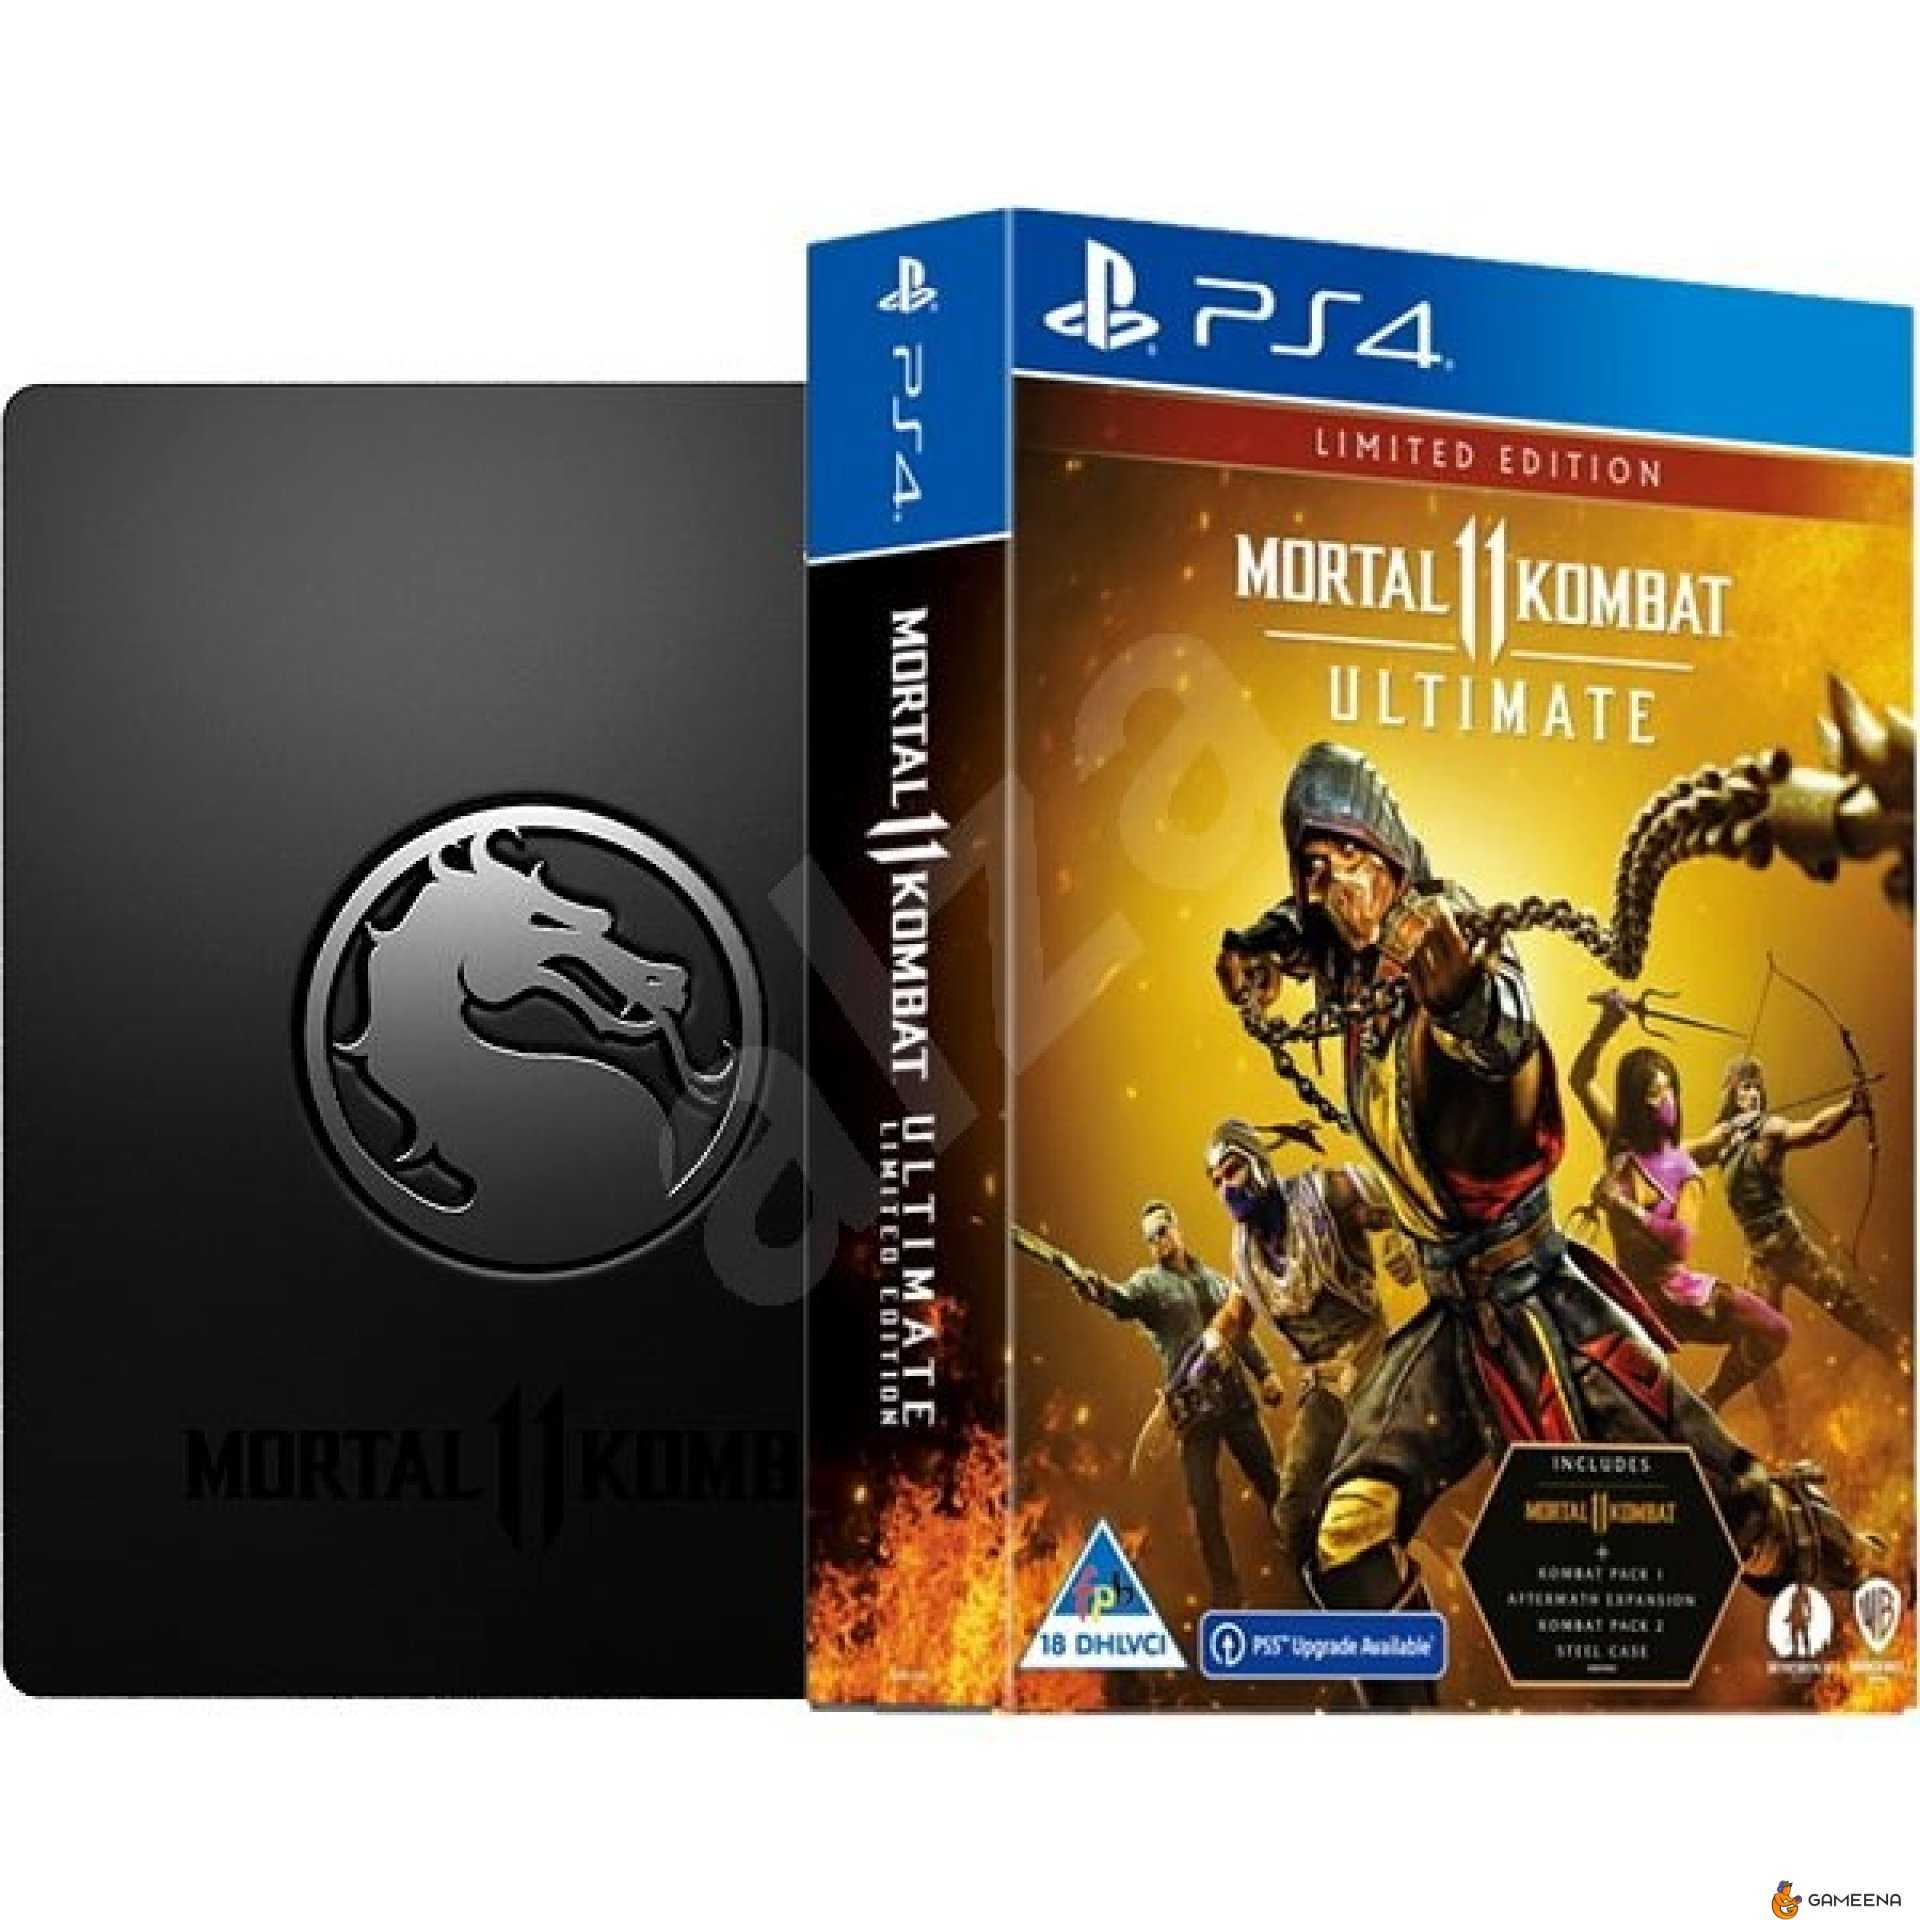 Мк11 ps4. Mortal Kombat 11 Ultimate Steelbook Edition. Mortal Kombat 11 ps4 диск. Ultimate-издание mk11. MK 11 Ultimate ps4.